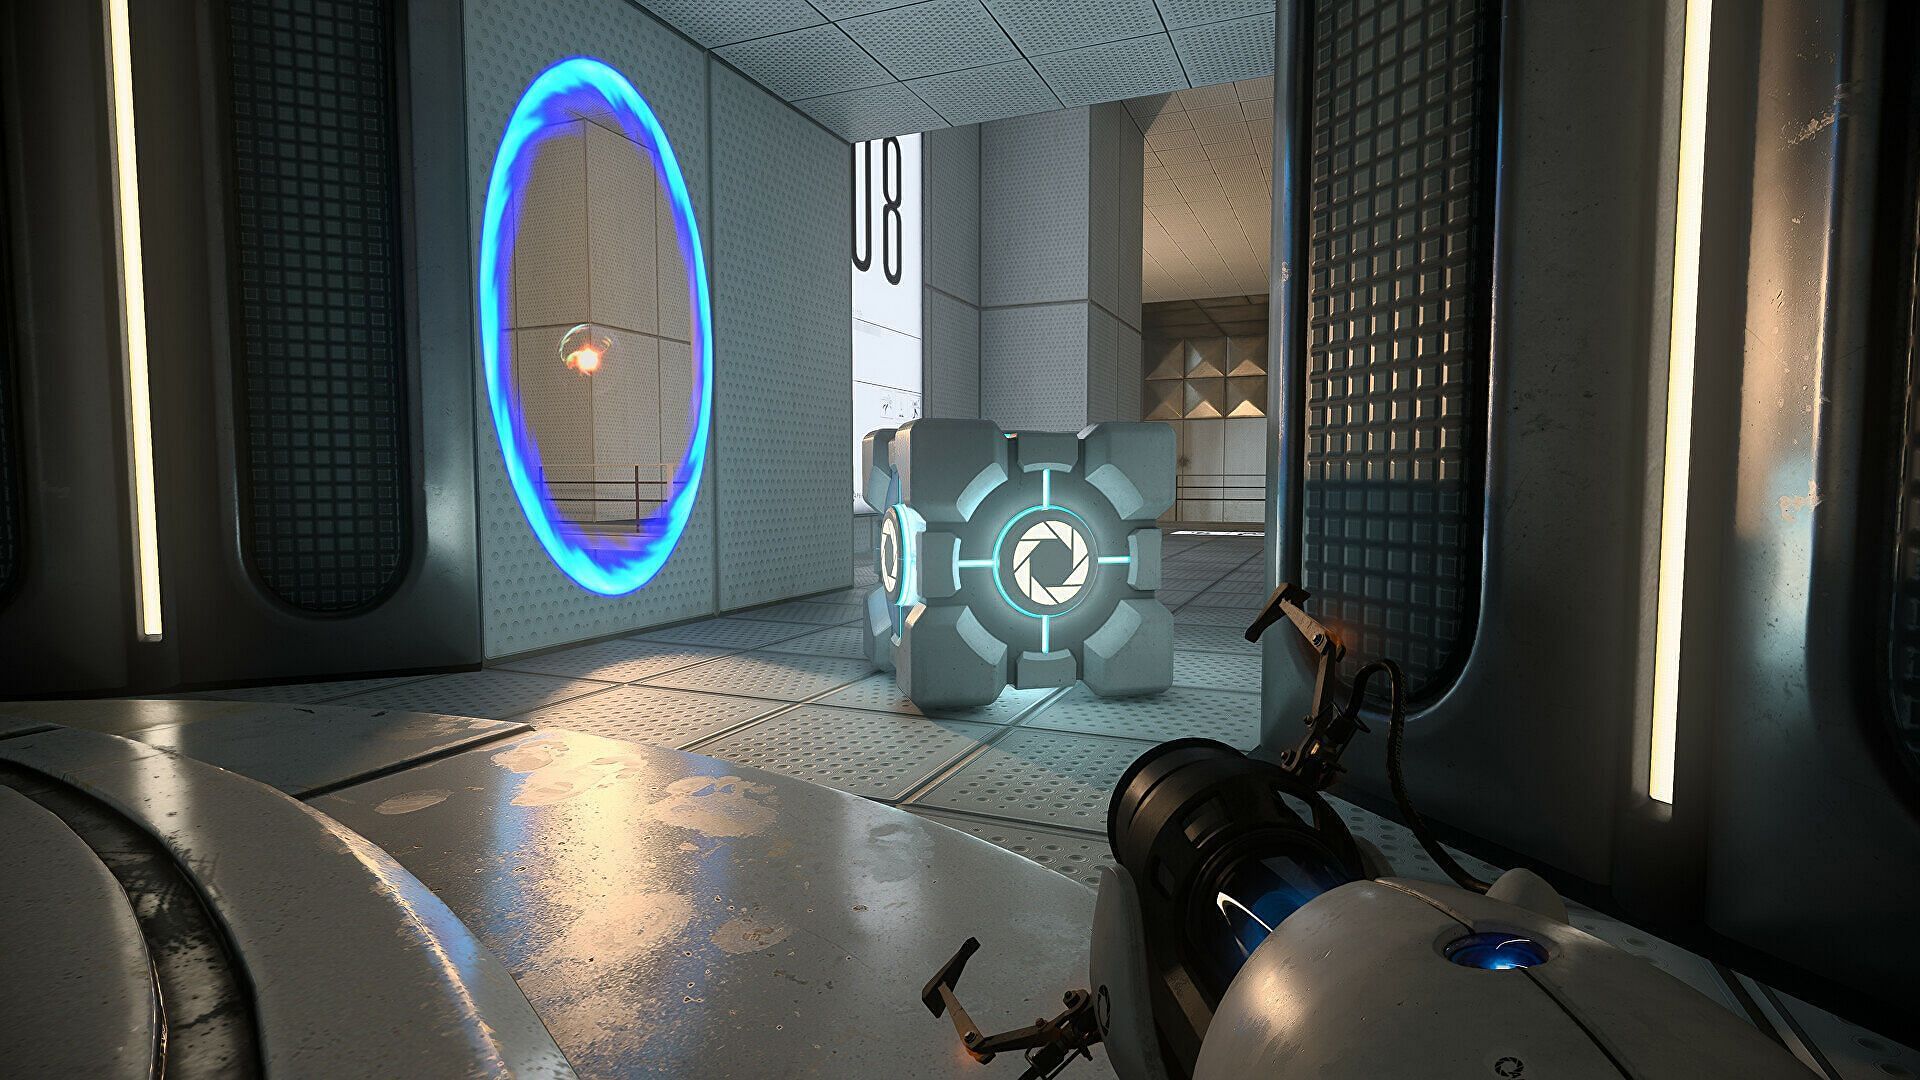 Full ray tracing has brought Portal back to life (Image via Nvidia)